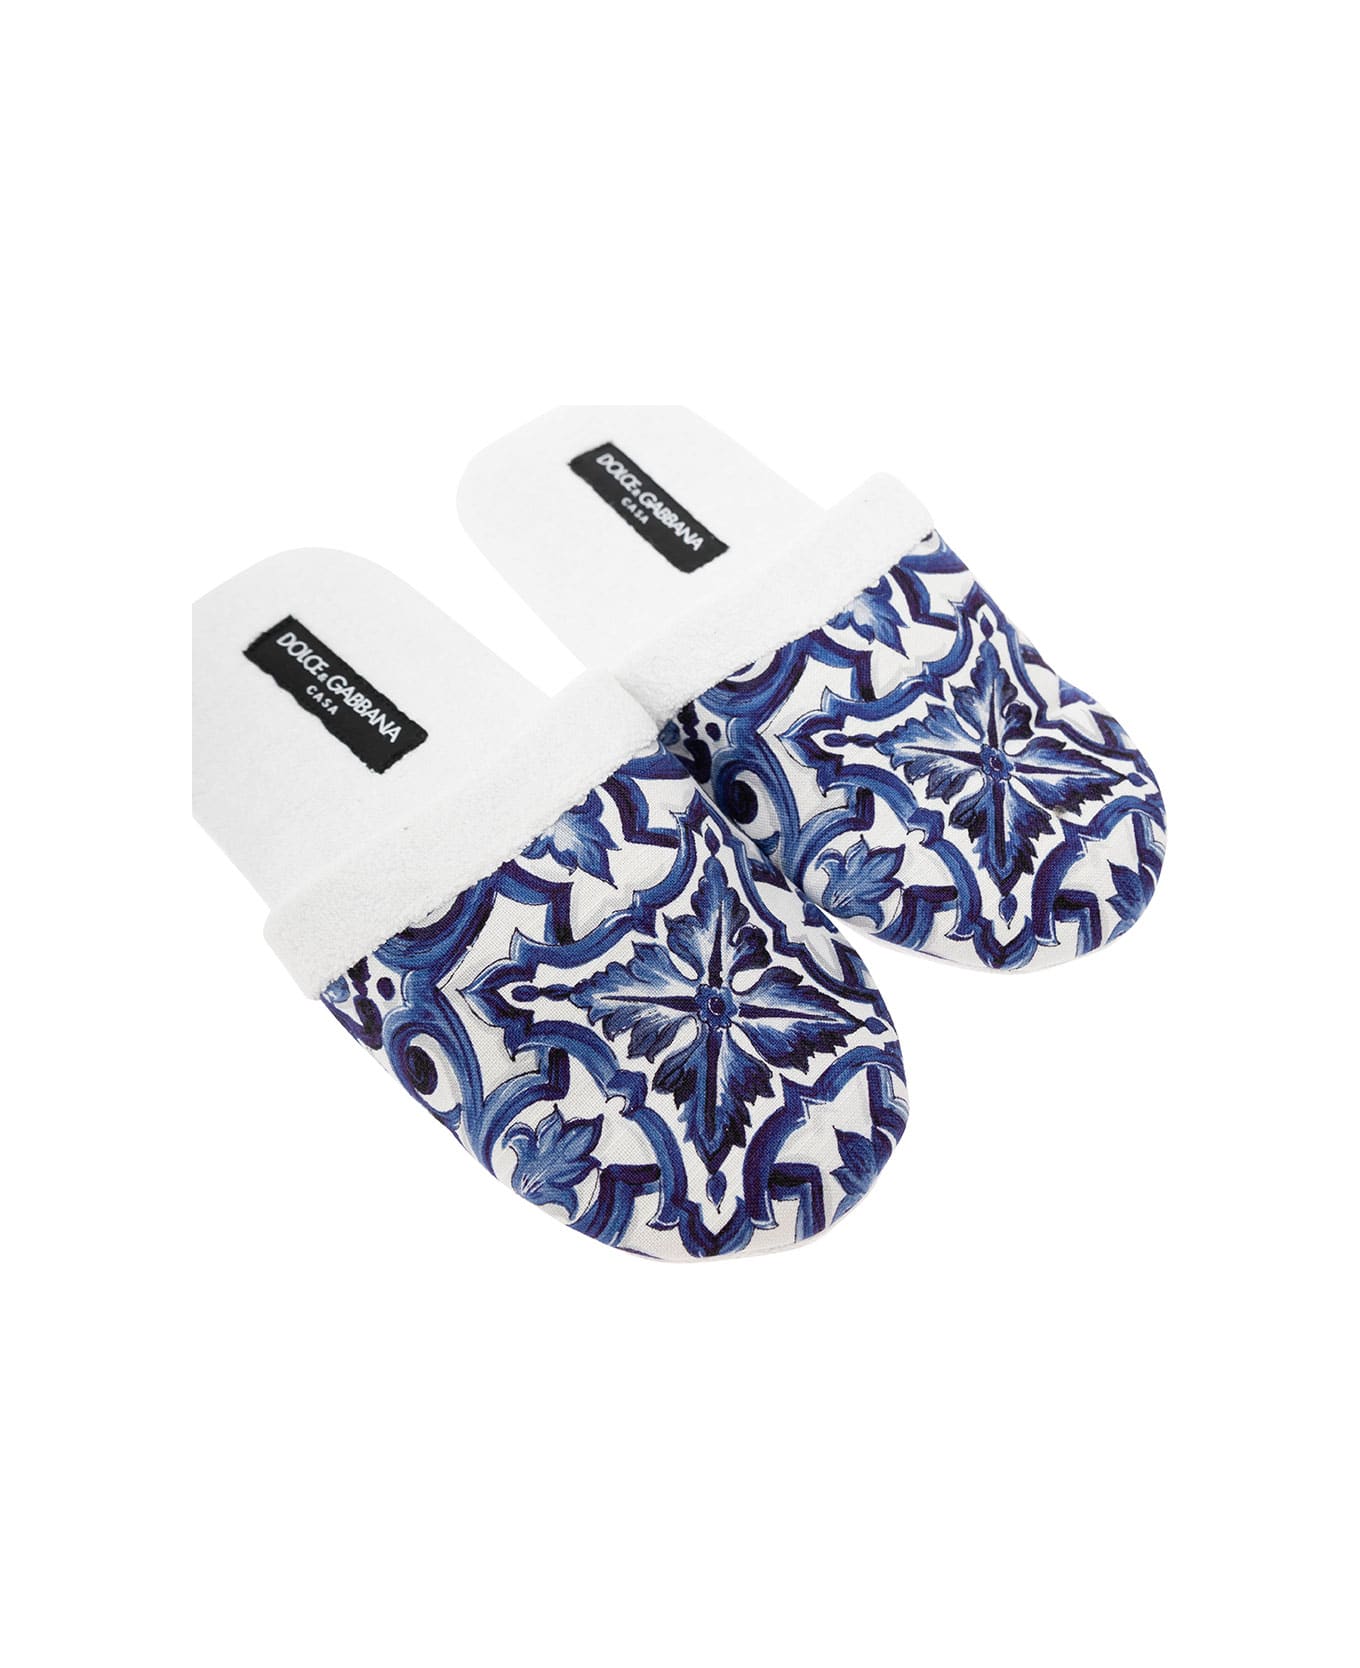 Dolce & Gabbana Slippers Blu Mediterraneo - White